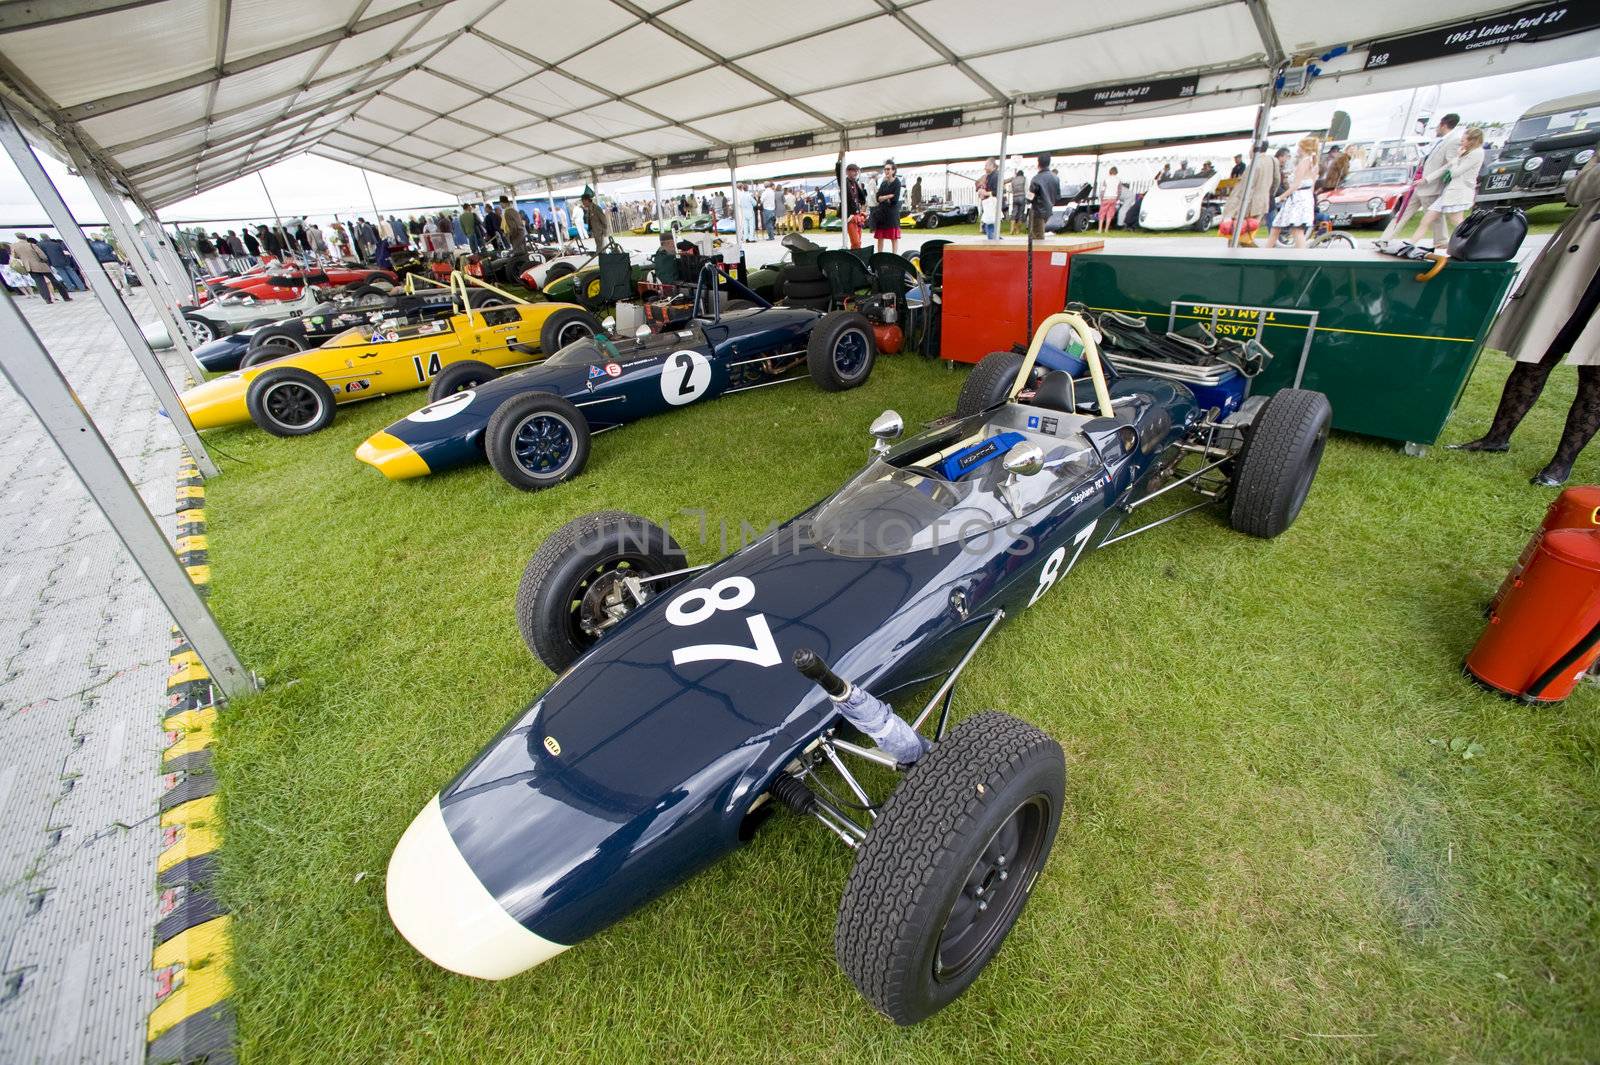 Vintage racer car, taken on September 2011 on Goodwood revial in UK